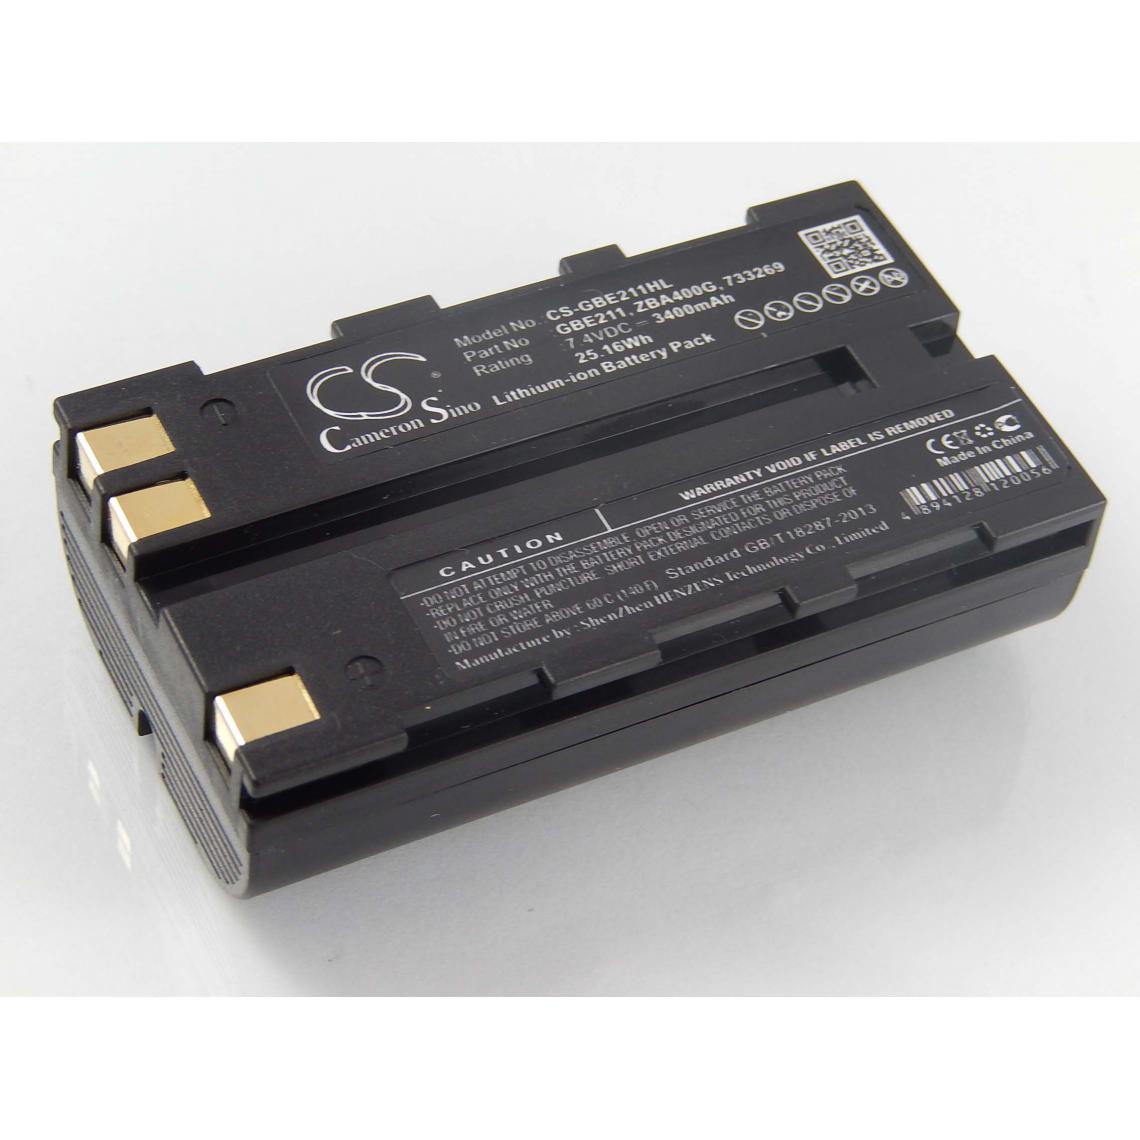 Vhbw - vhbw Batterie compatible avec Leica Piper 200 Laser dispositif de mesure laser, outil de mesure (3400mAh, 7,4V, Li-ion) - Piles rechargeables